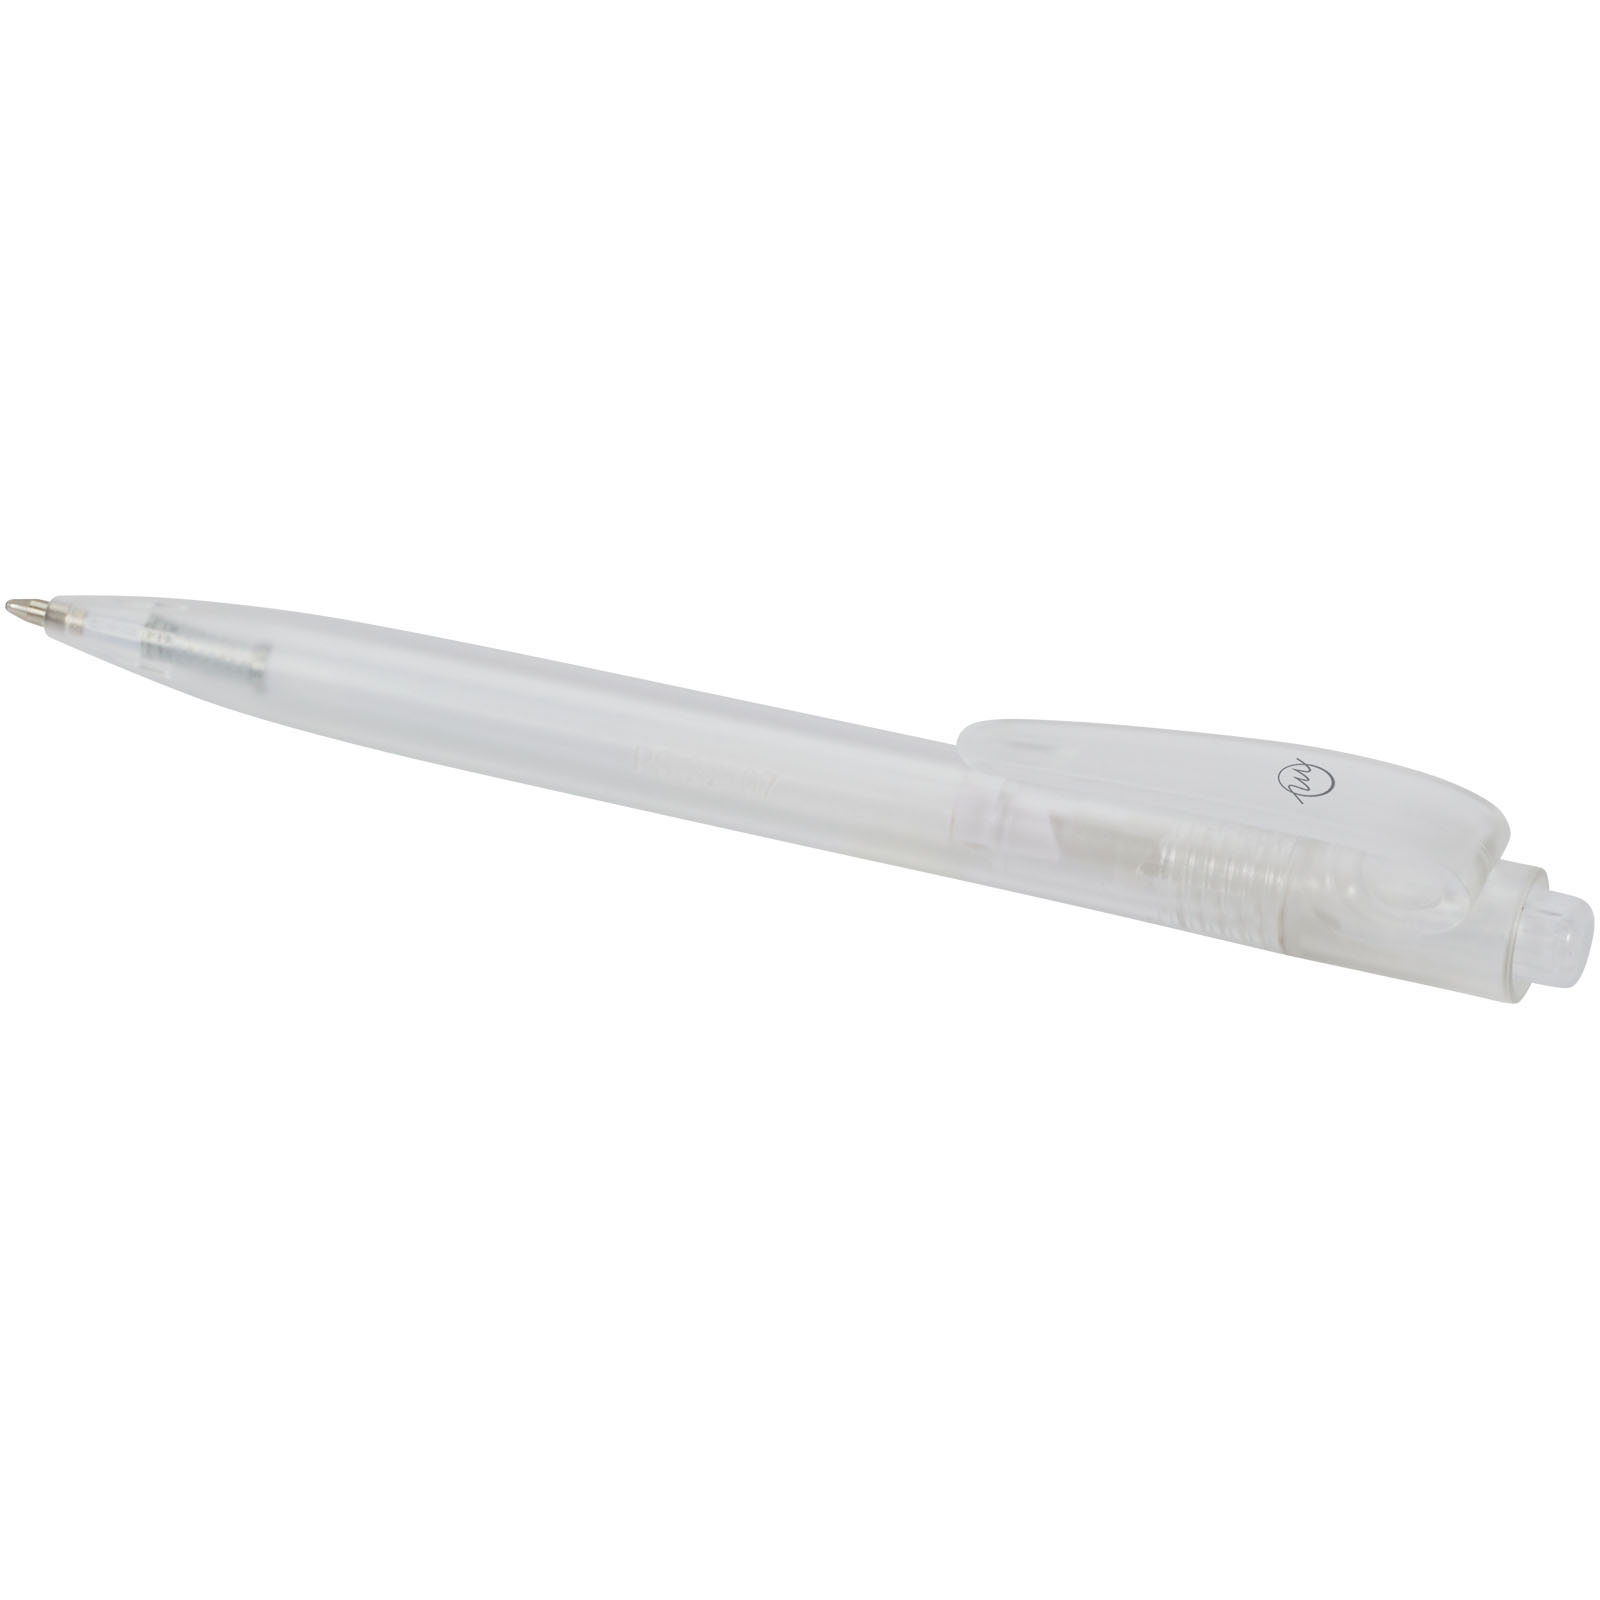 Advertising Ballpoint Pens - Thalaasa ocean-bound plastic ballpoint pen - 2